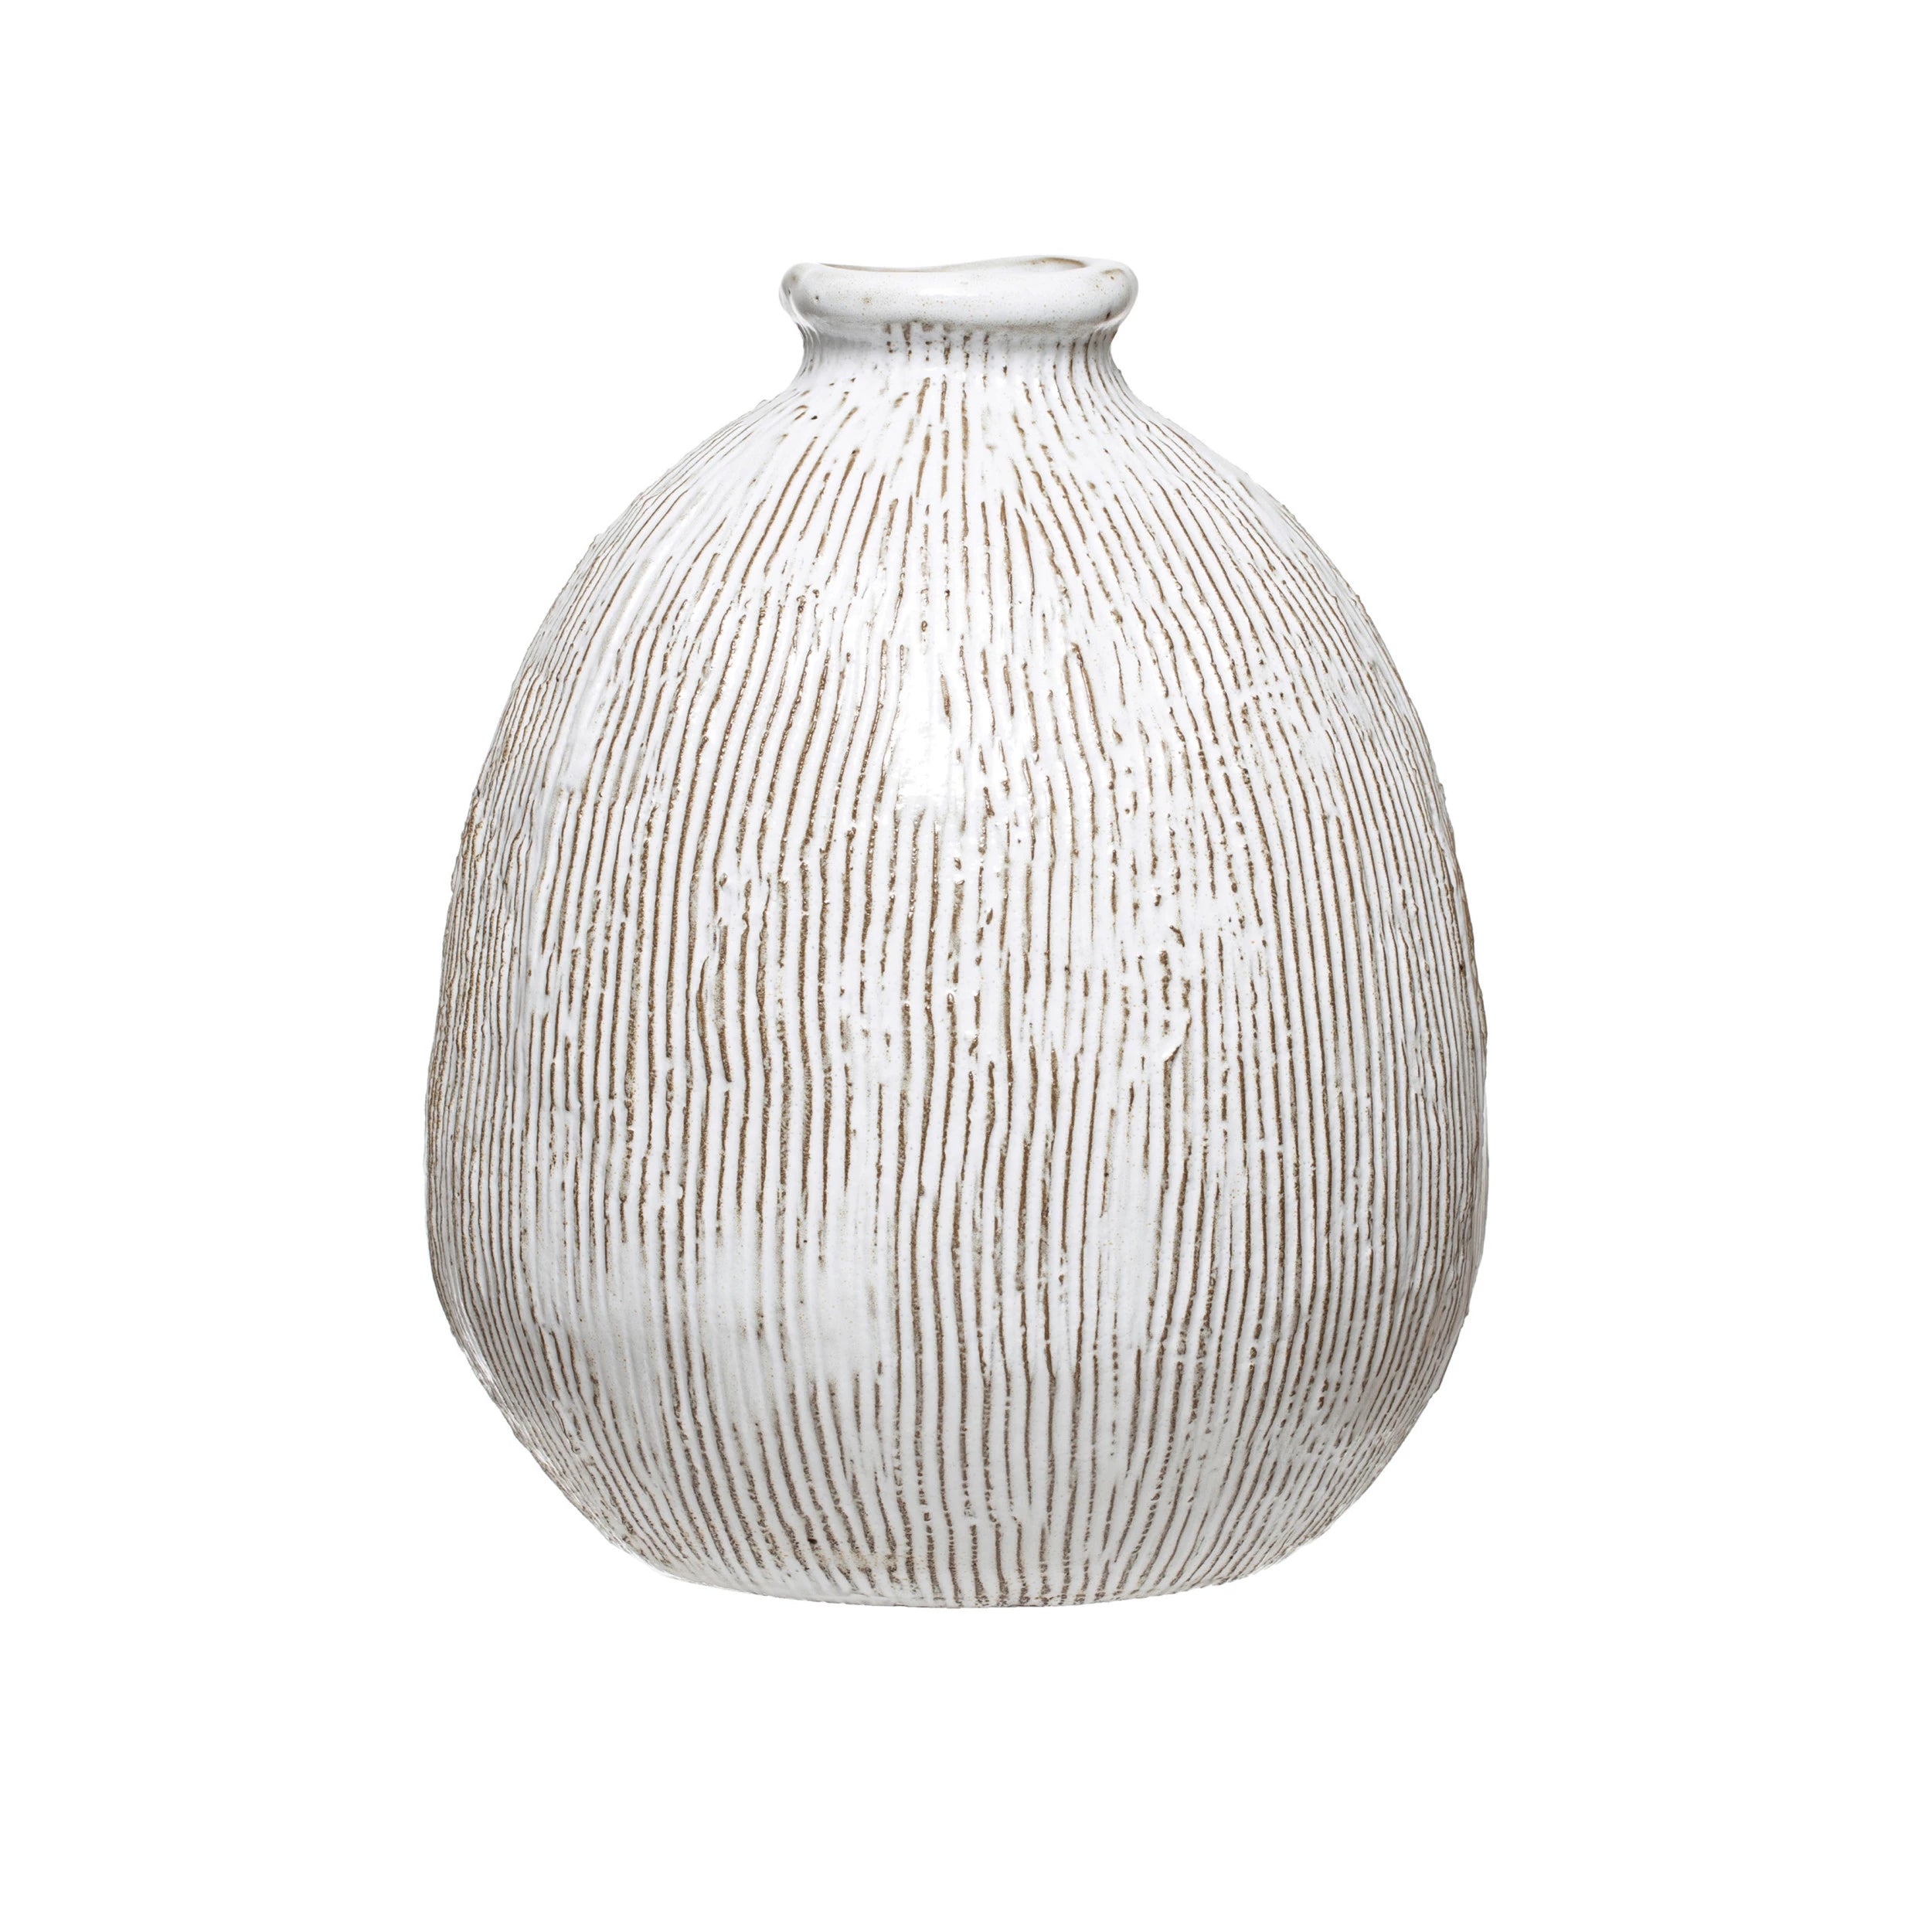 Terracotta Vase with Engraved Stripes